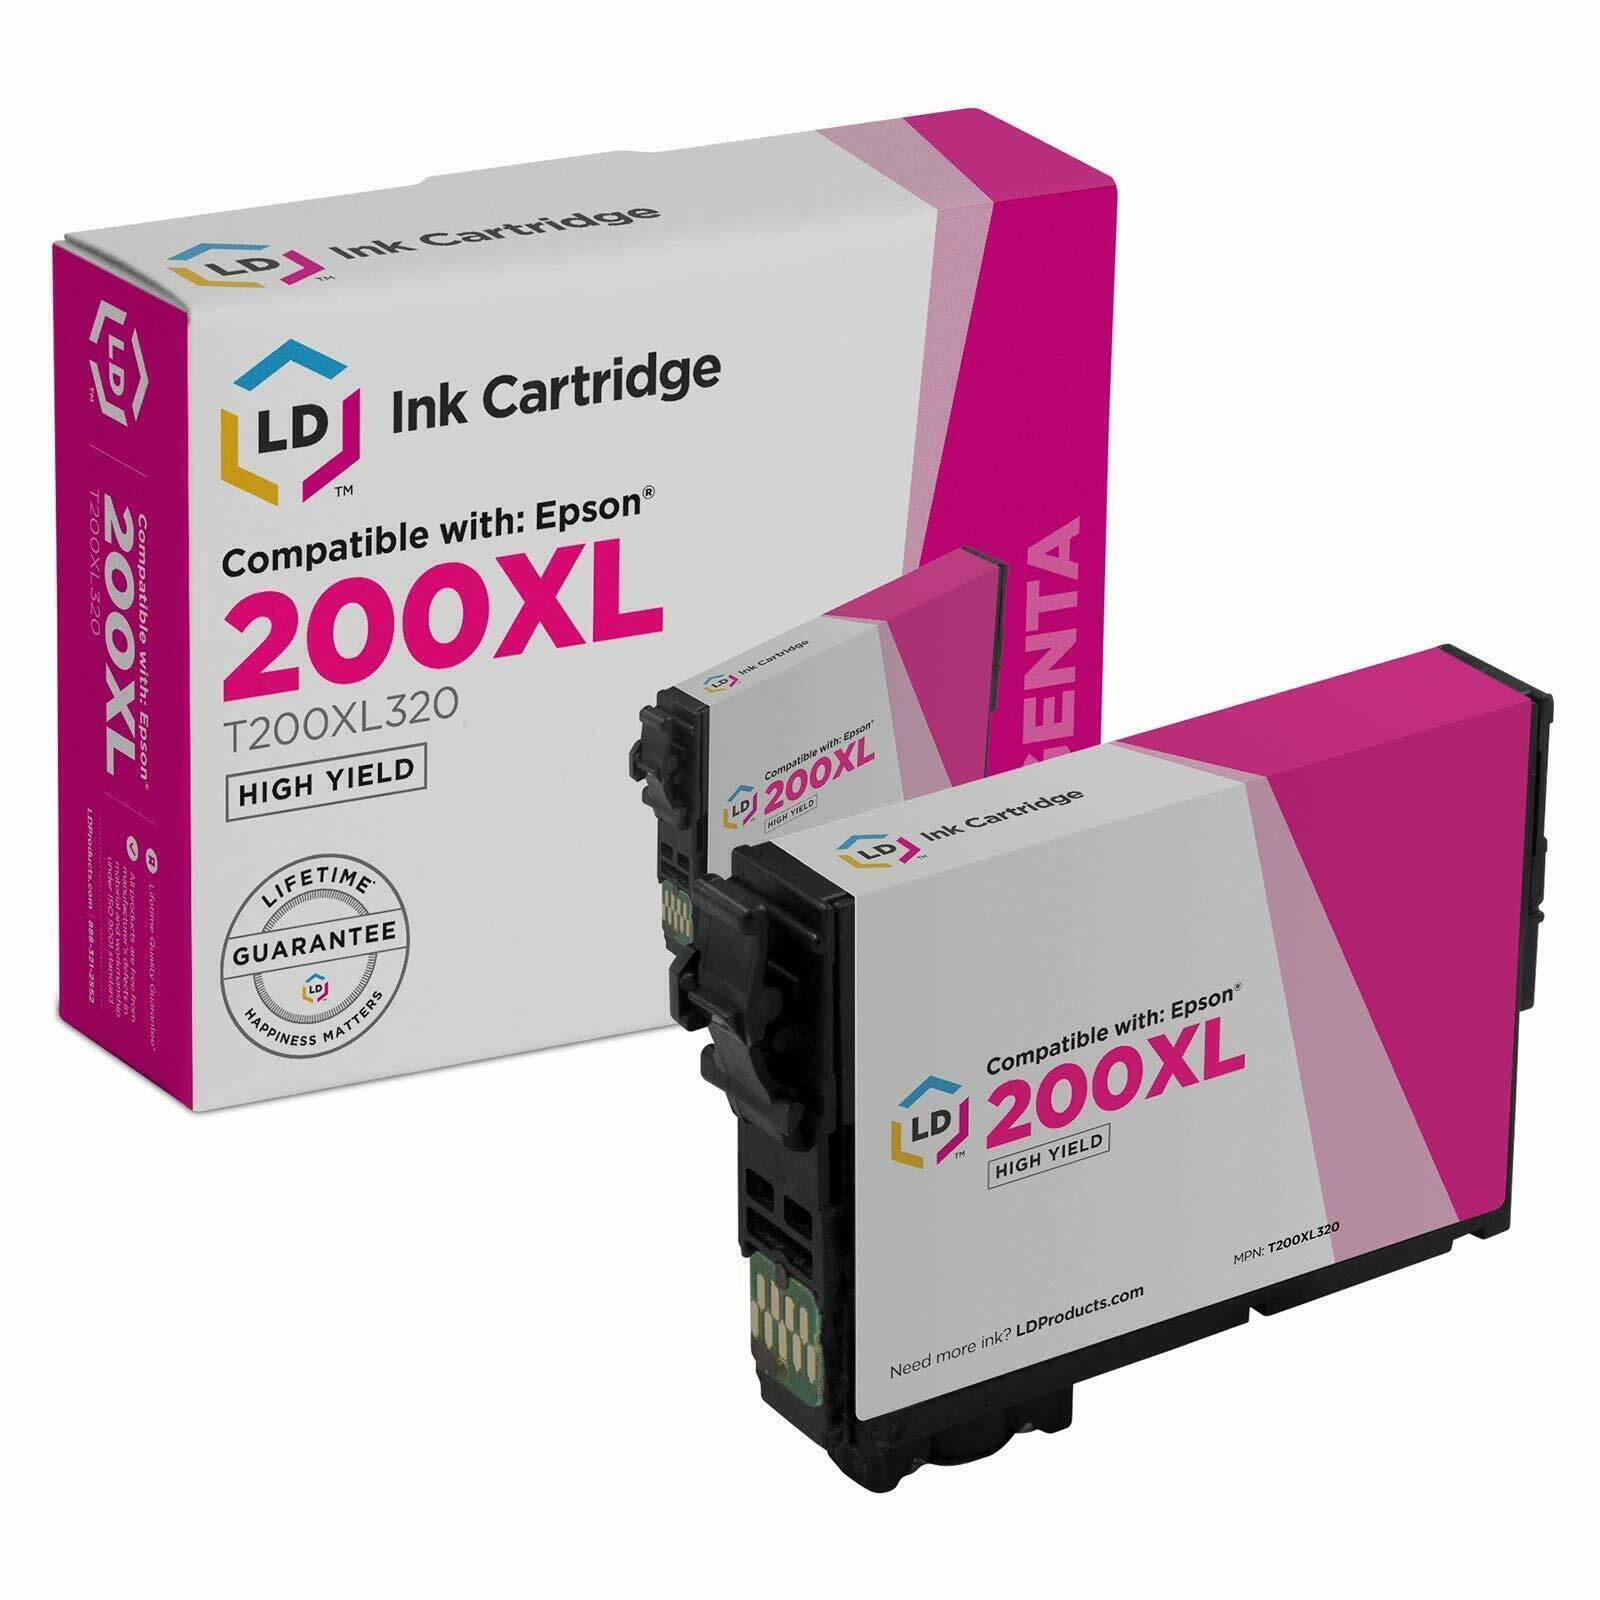 LD T200XL320 200XL Magenta Ink Cartridge for Epson XP-400 XP-200 WF-2520 WF-2530